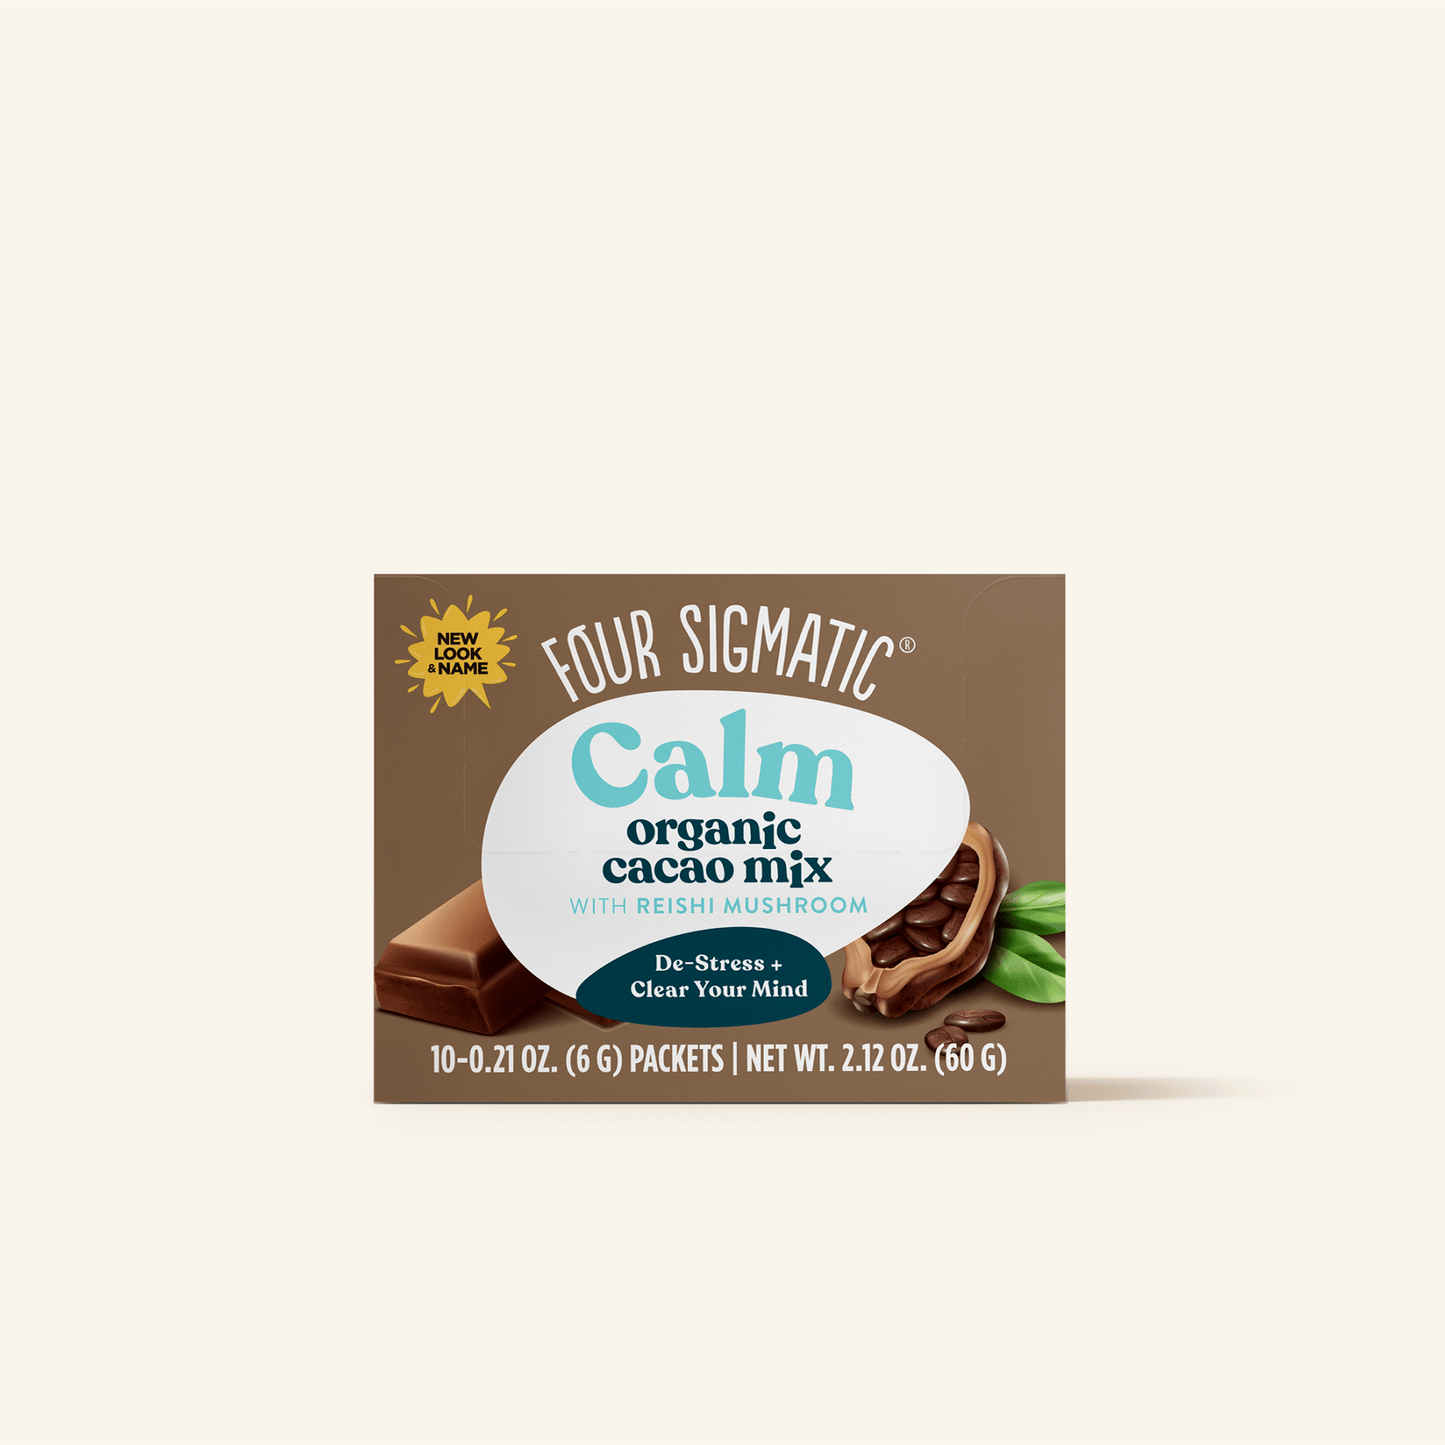 Calm Cacao 1-Pack